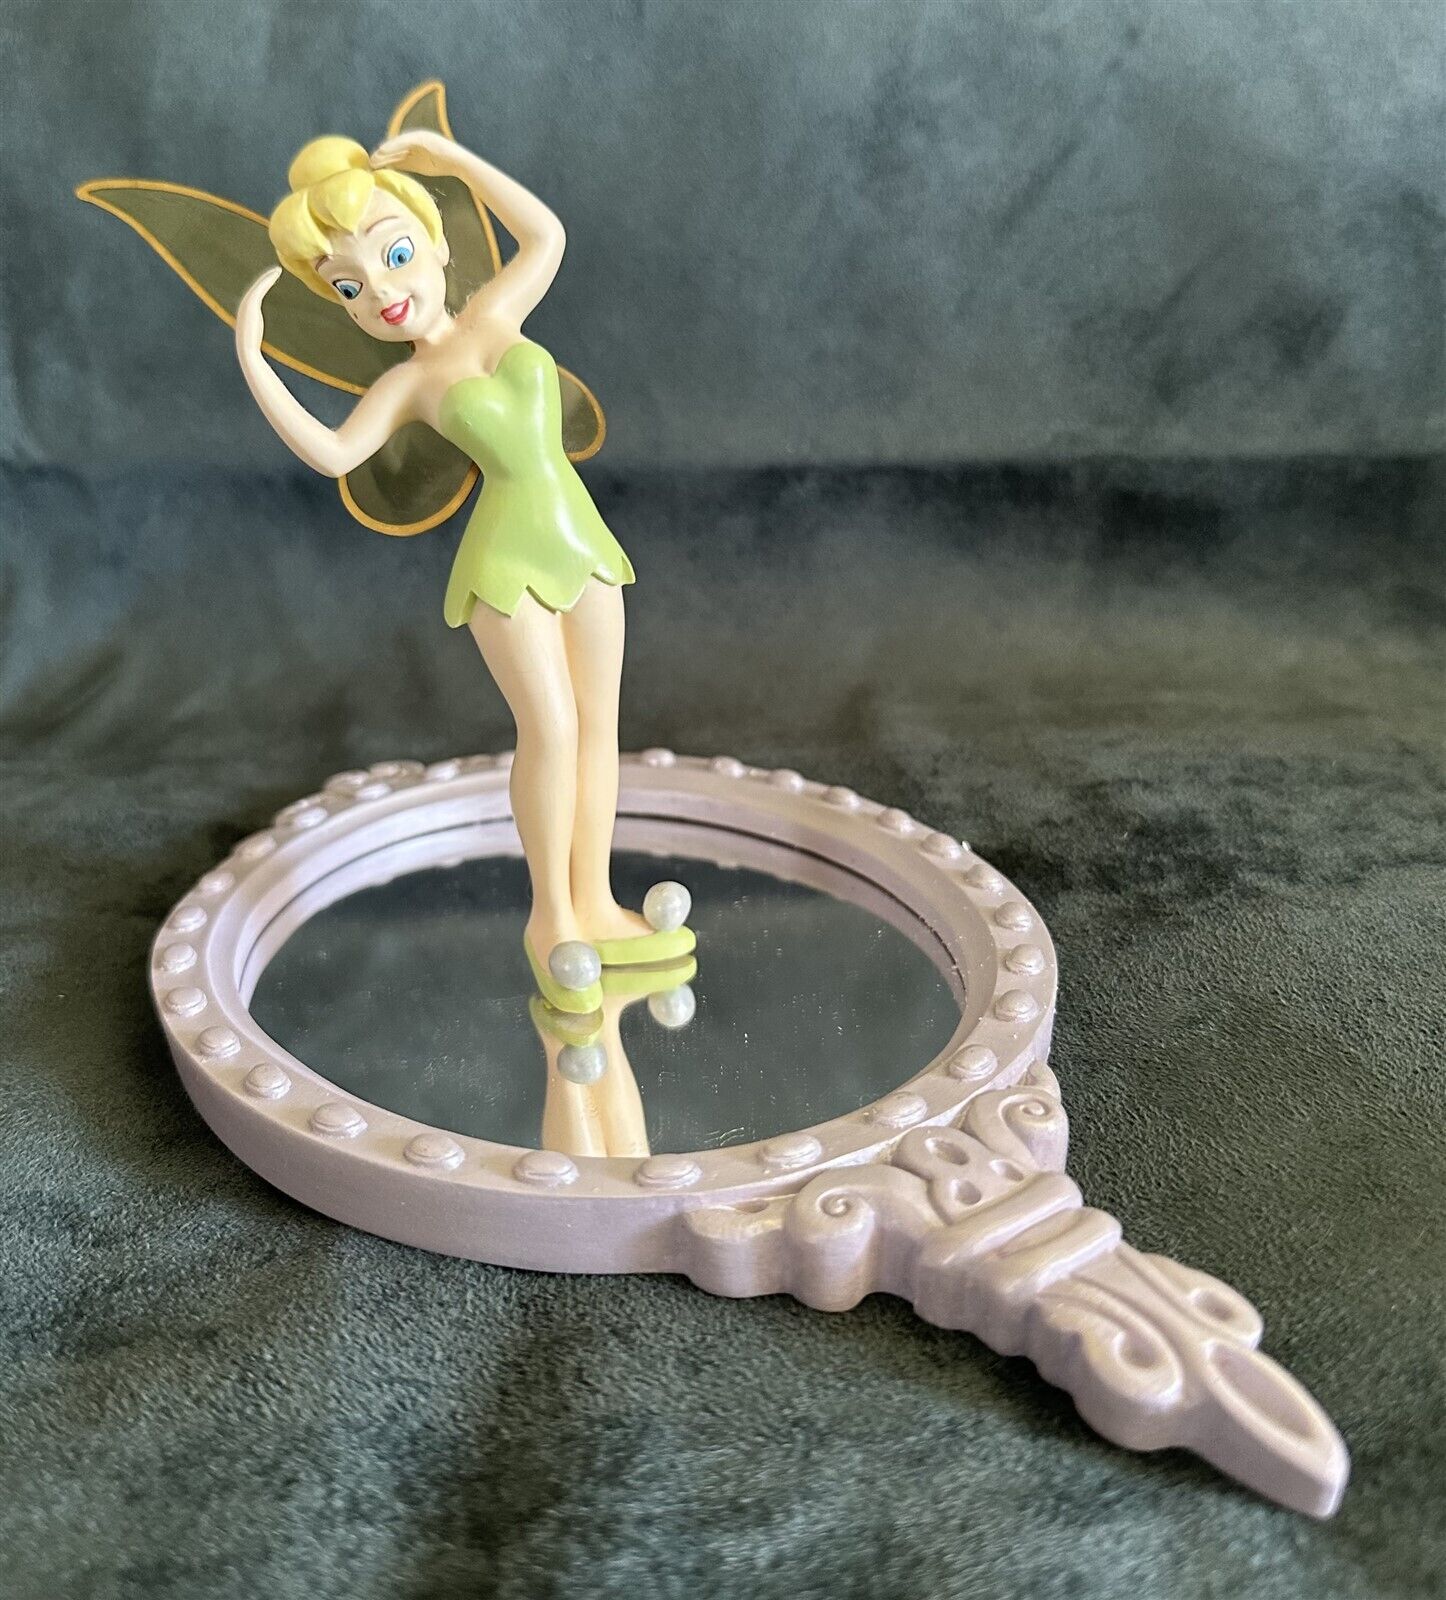 Disney TINKER BELL Standing on a Mirror Figurine Original Box